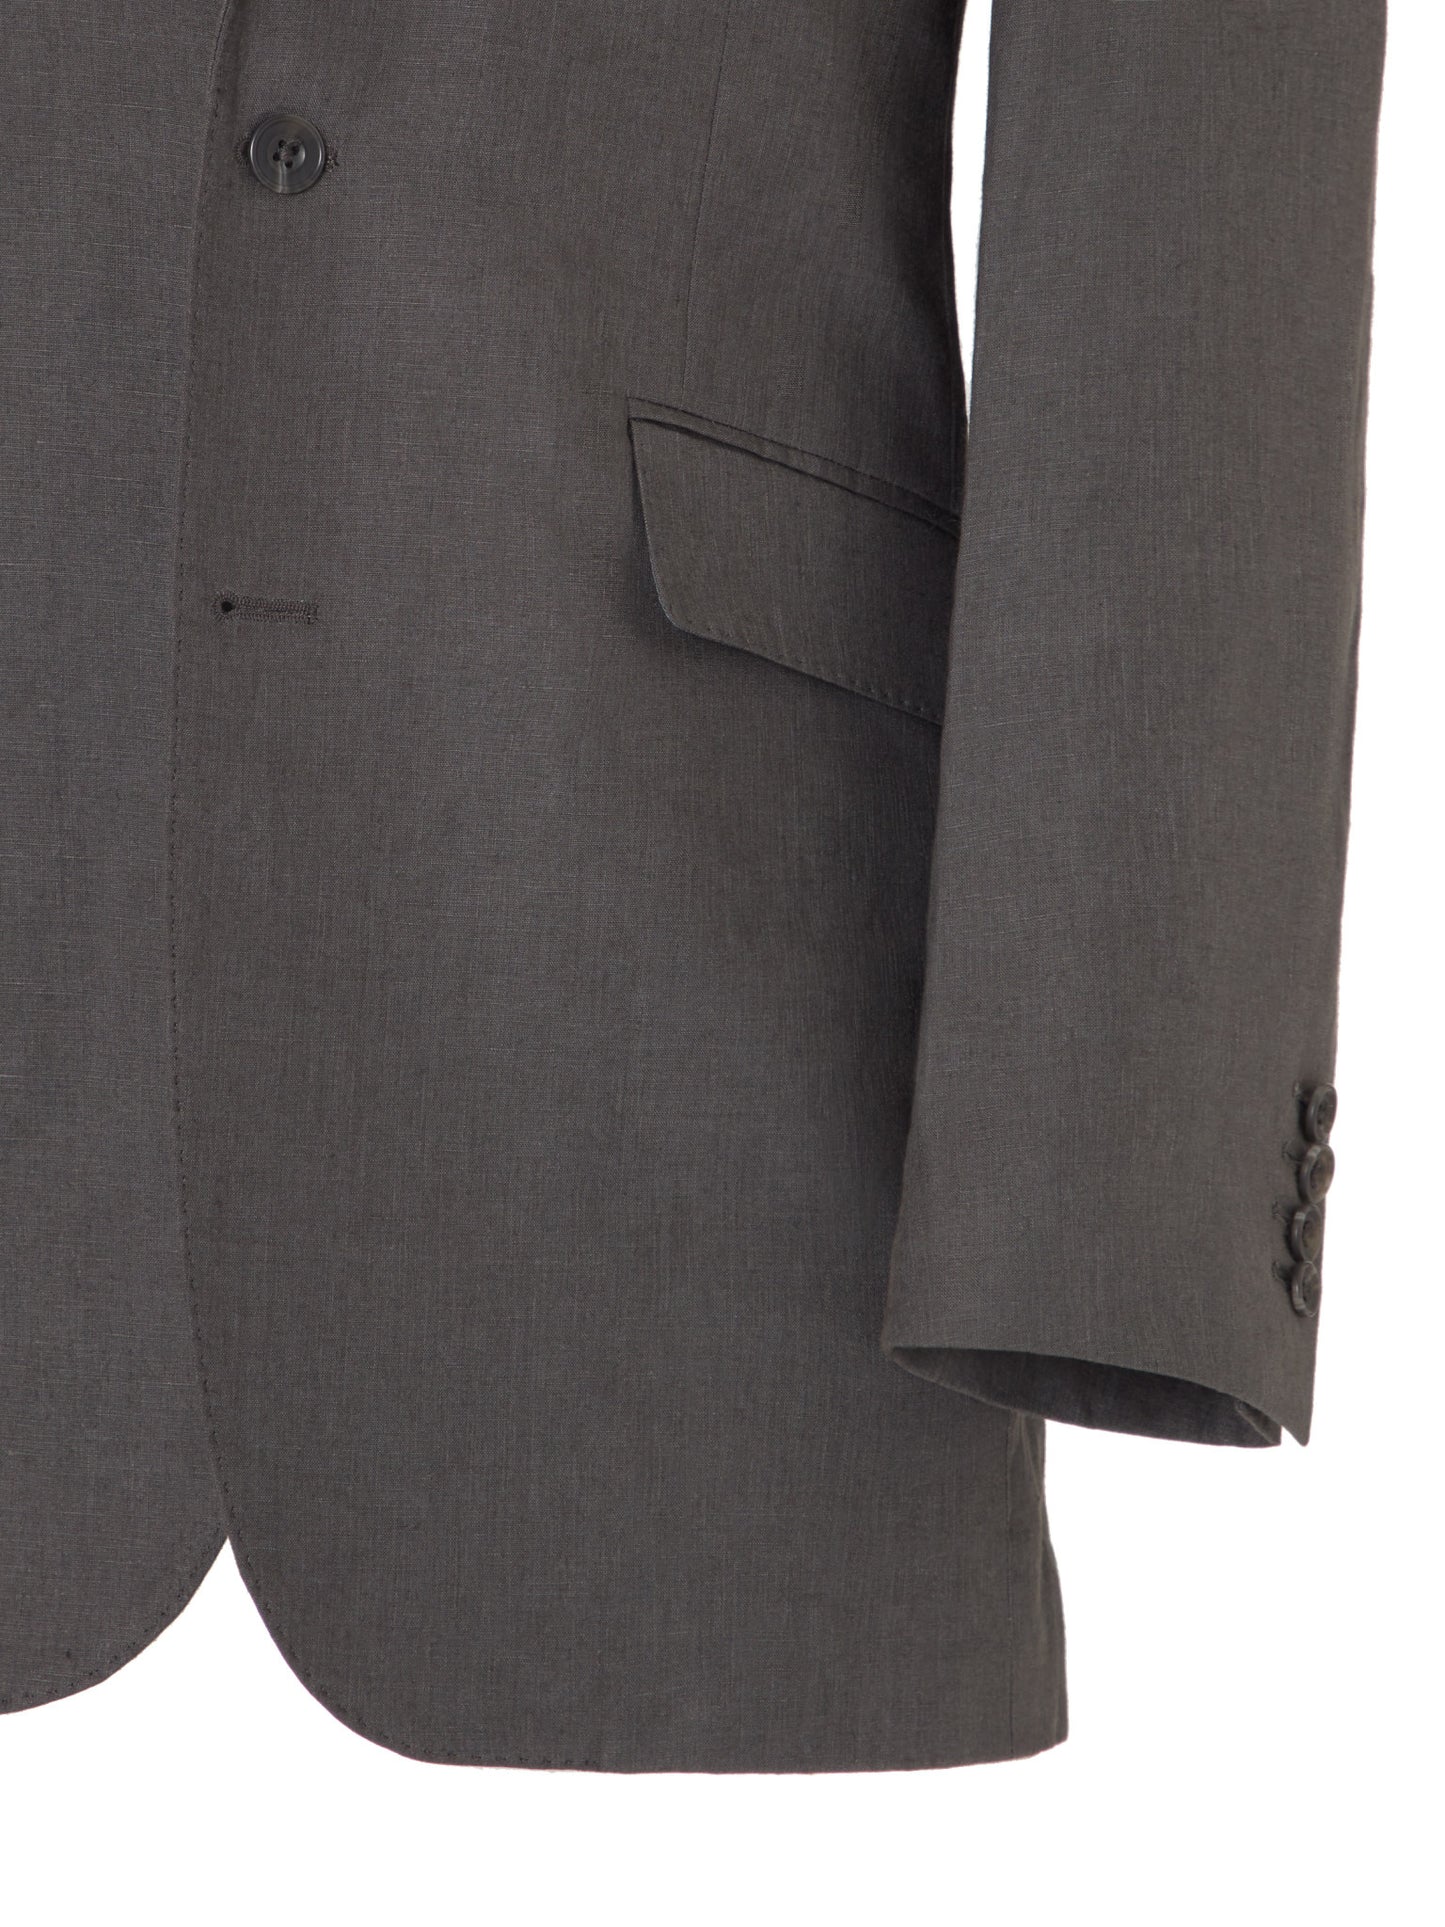 Carlyle Suit - Slate Linen